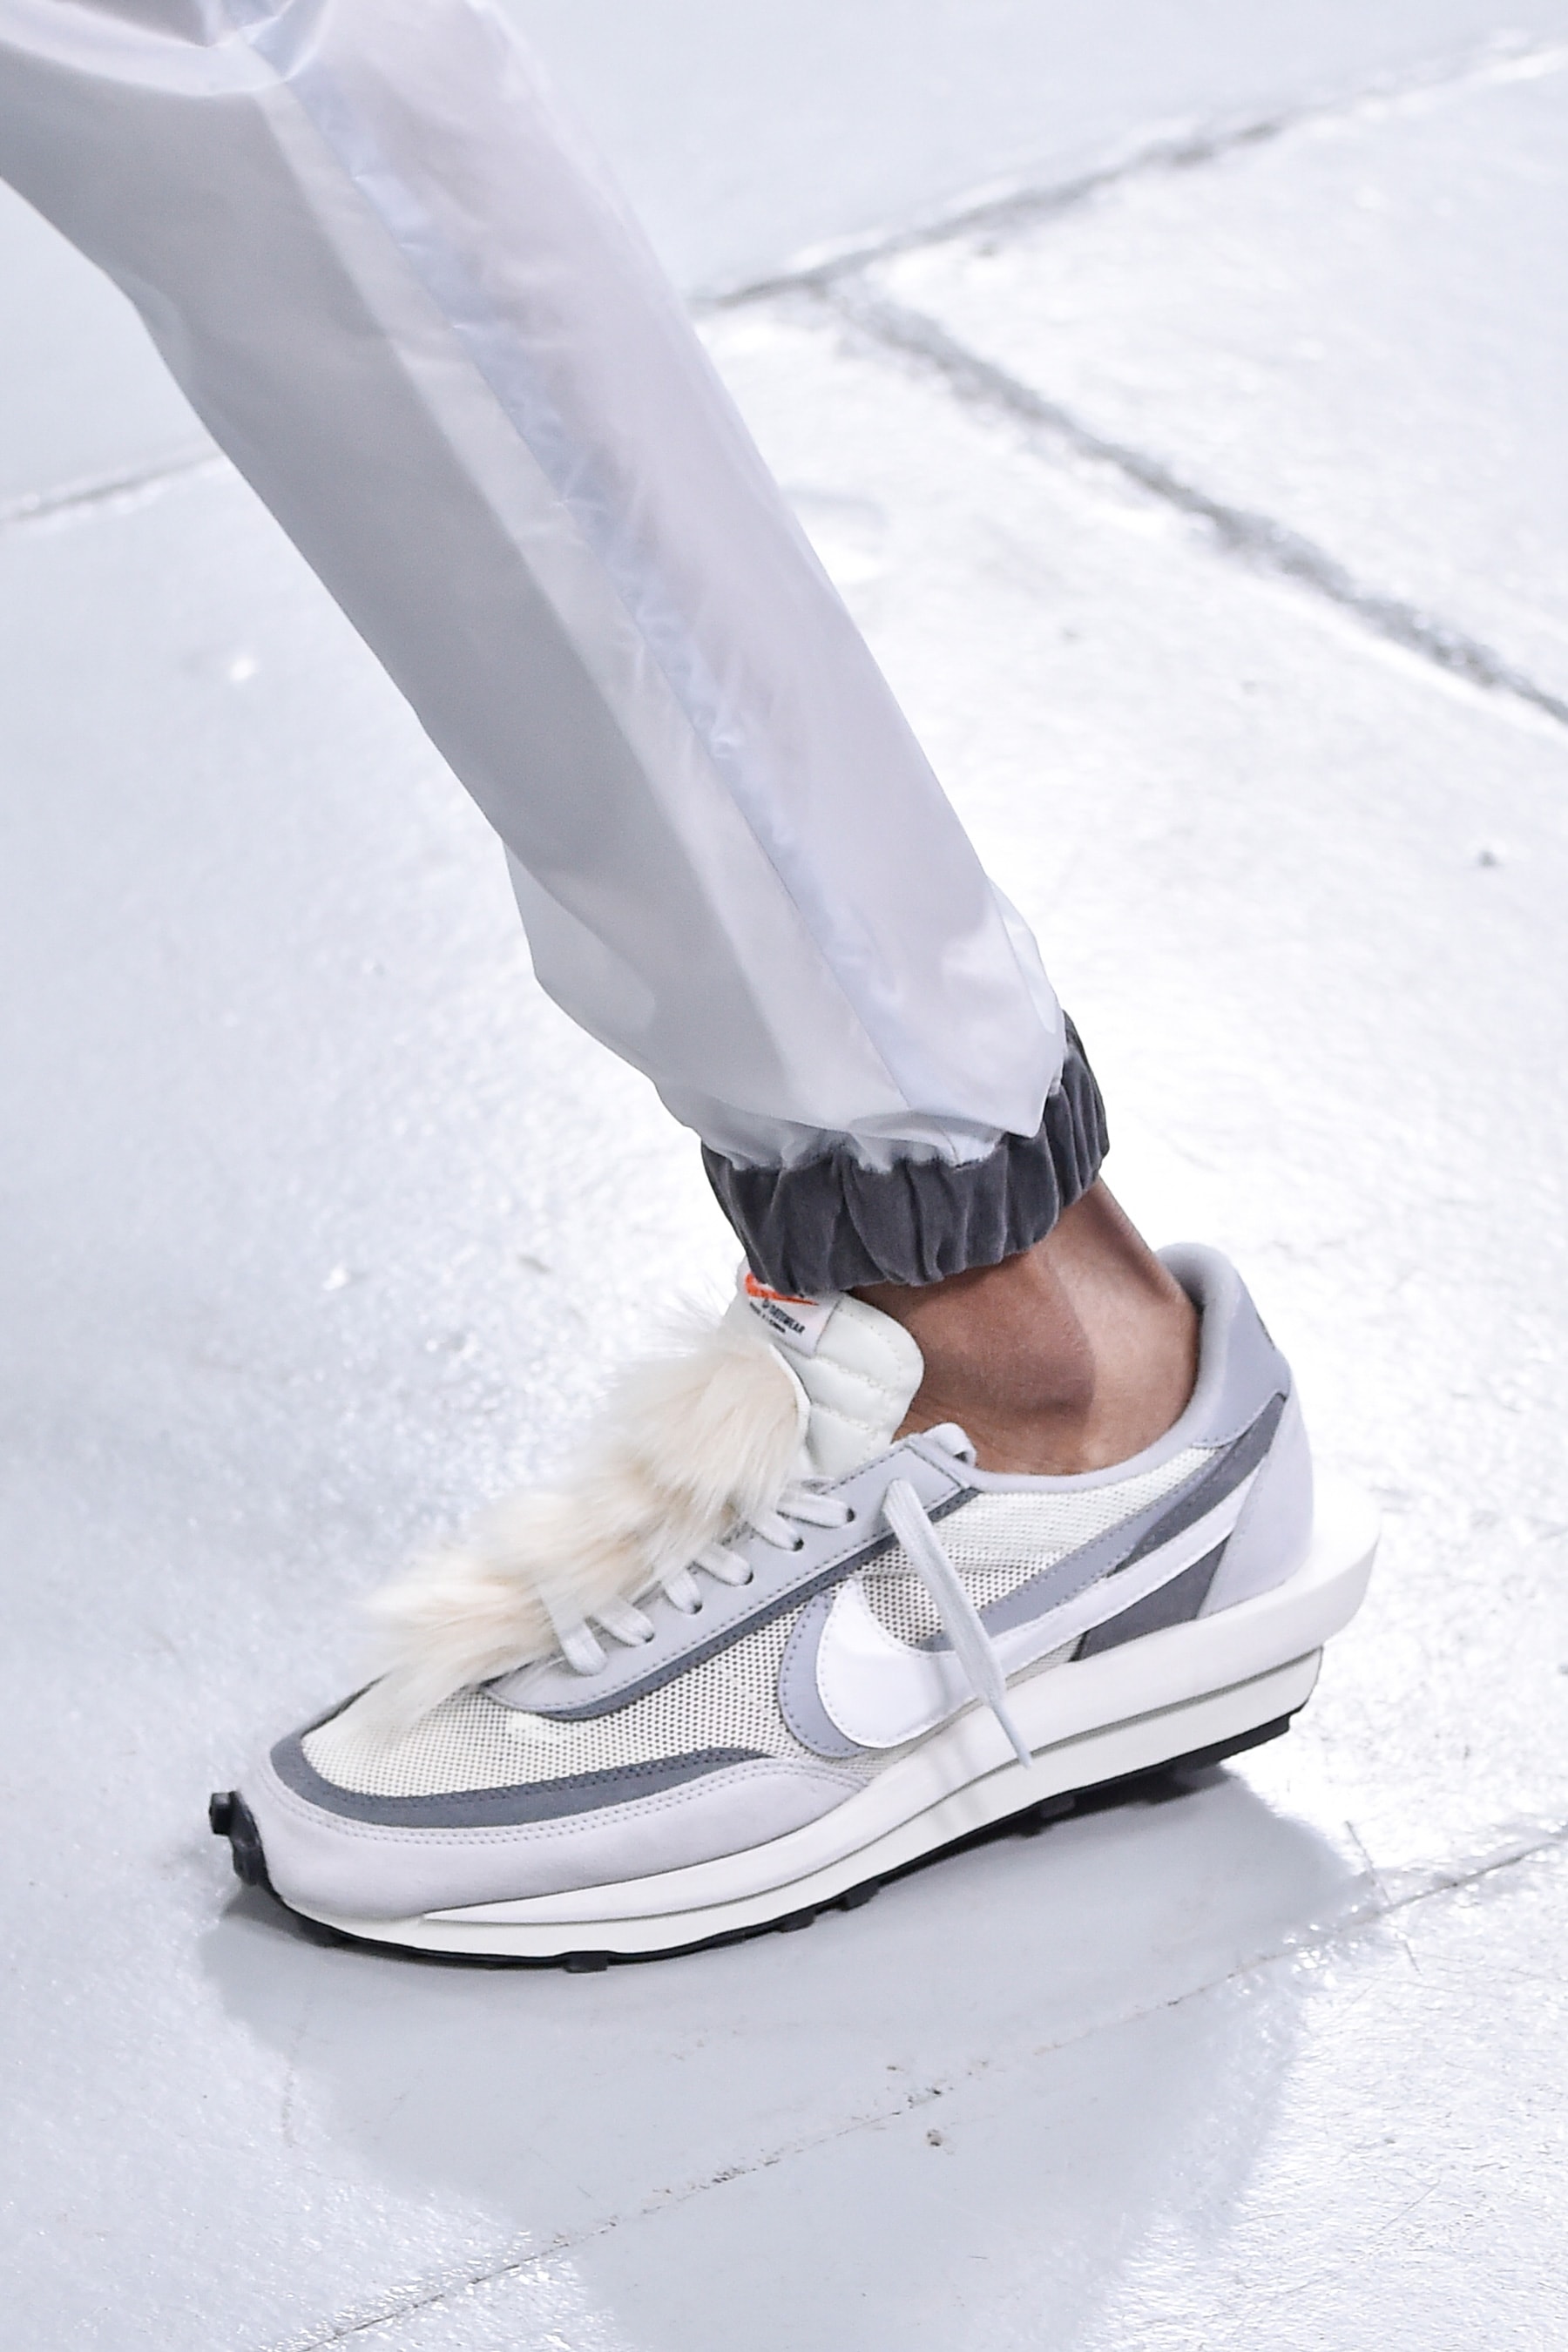 Paris Fashion Week Men's: Top Shoes, Nike, Sacai, Off-White